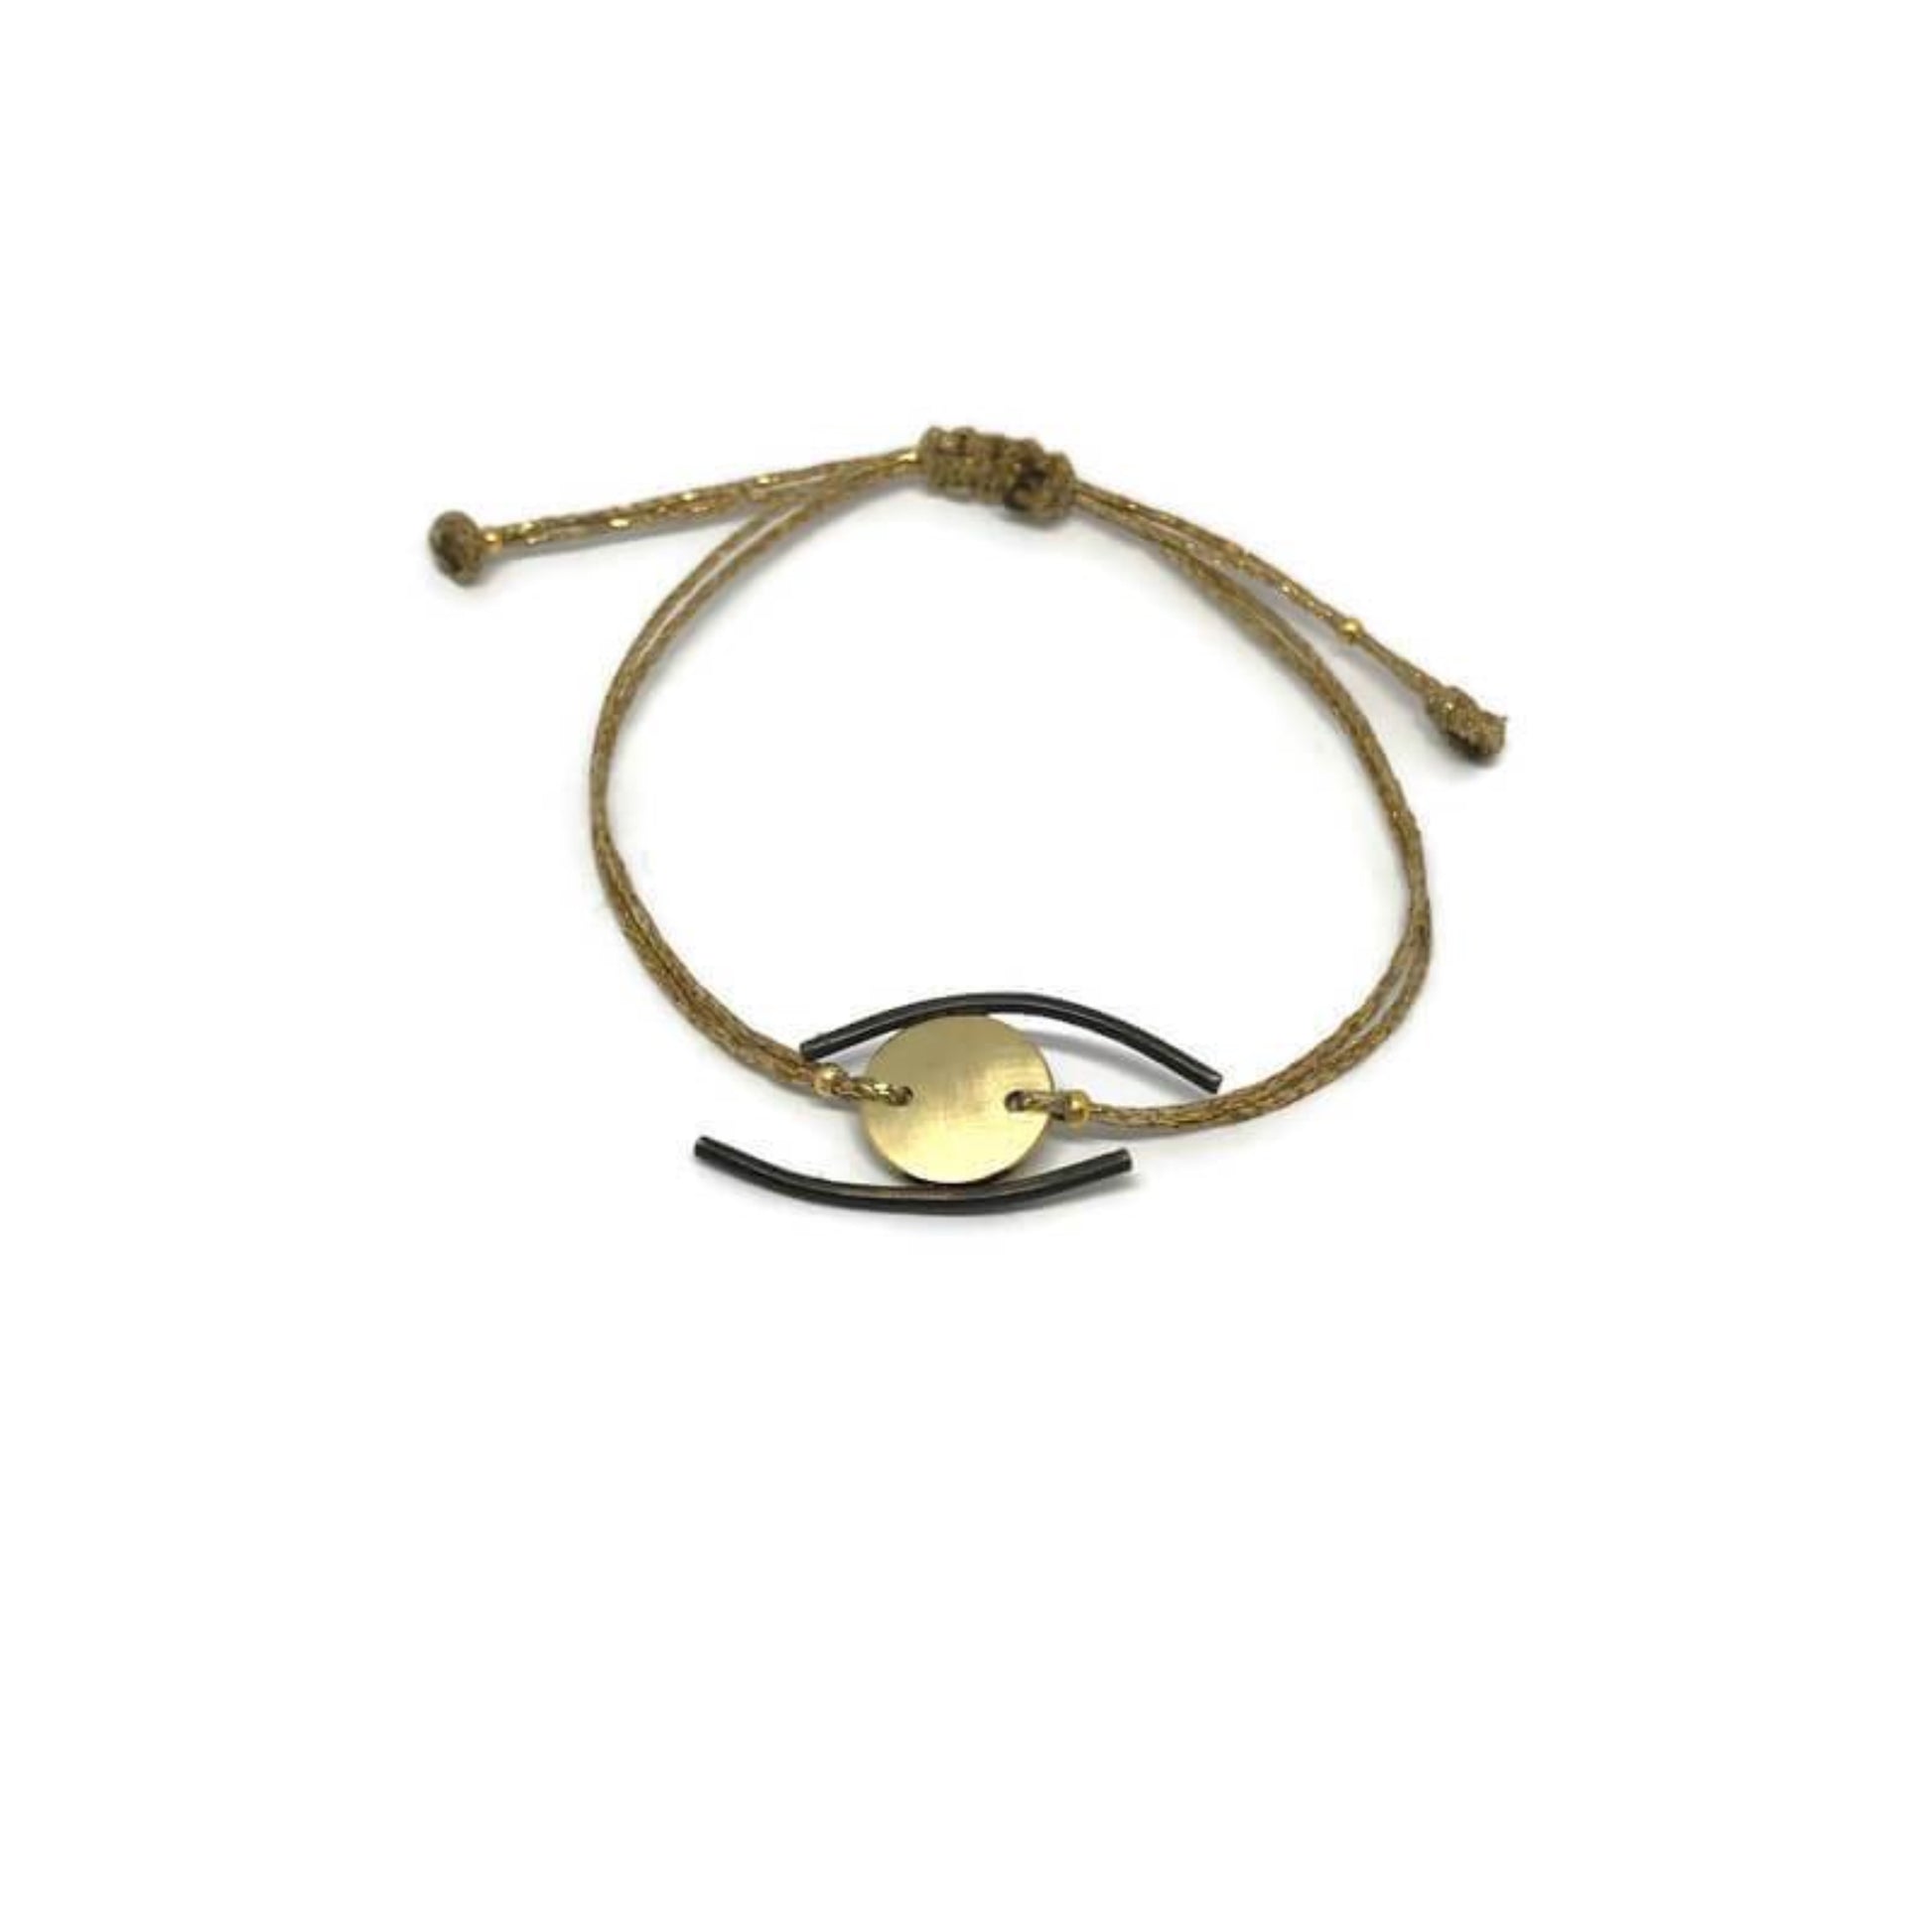 Oxidised brass brascelet | Black - Yellow Mataki Bracelet - CURIUDO